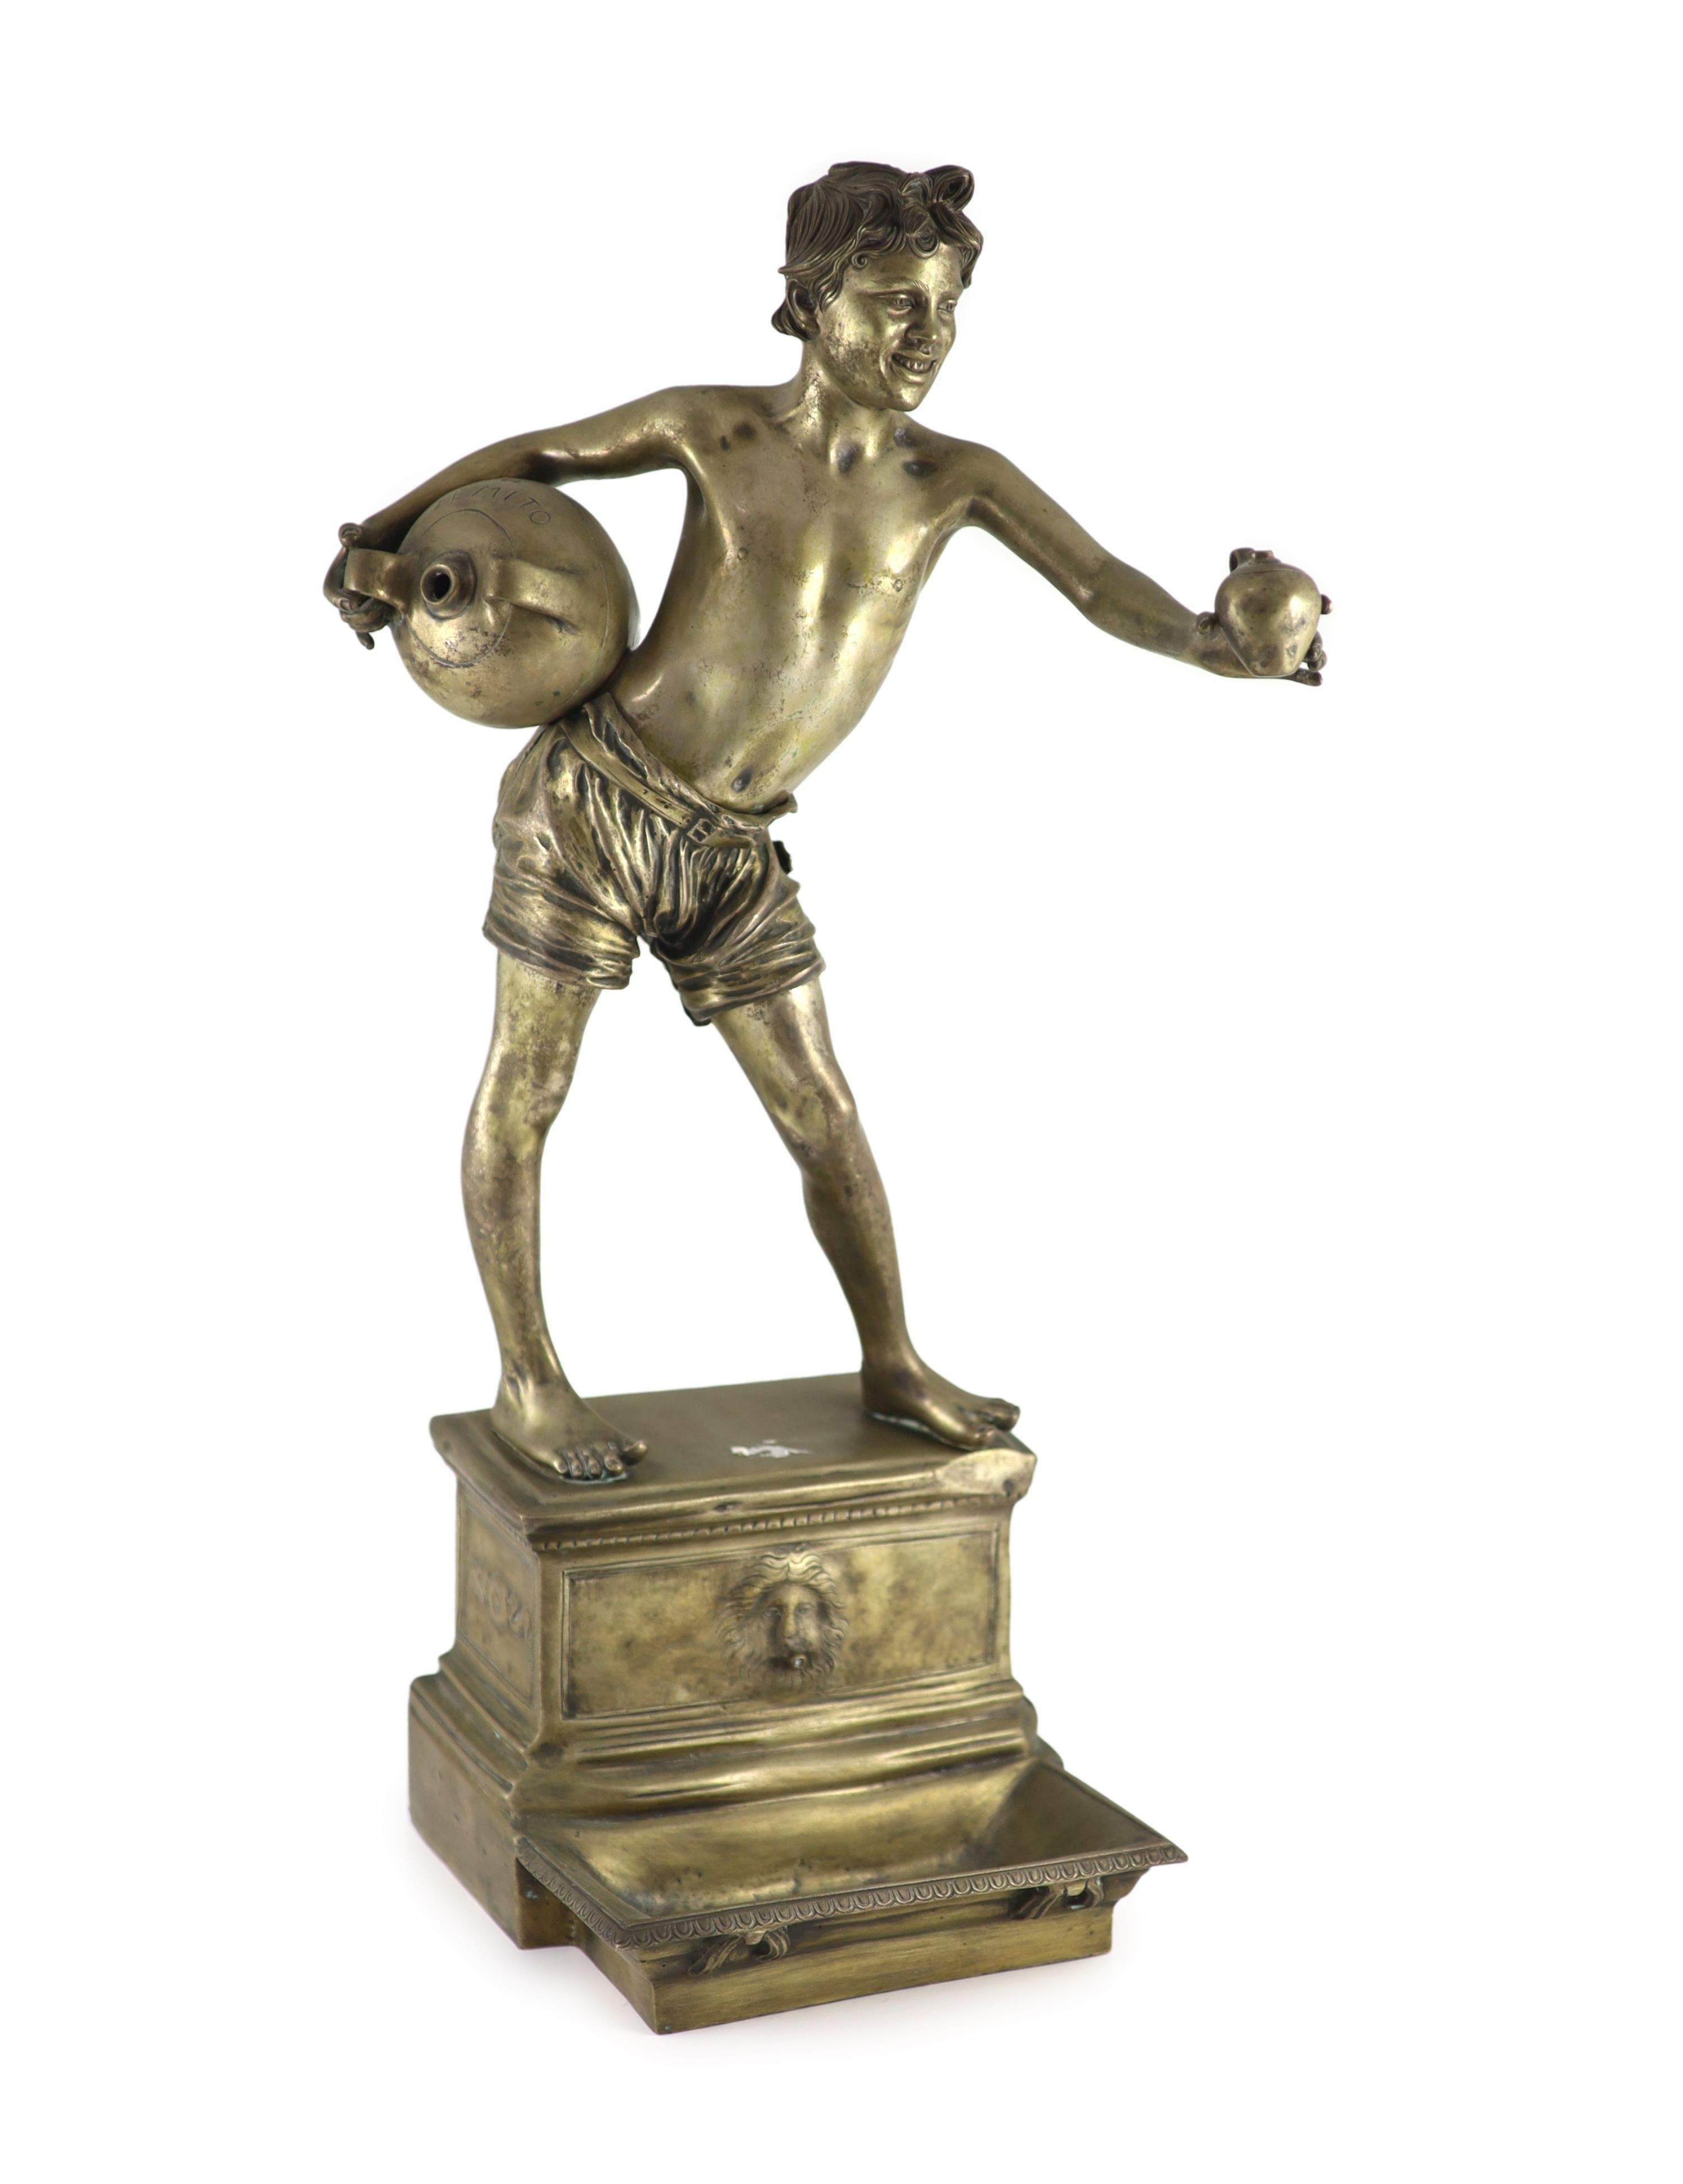 Vincenzo Gemito (Italian 1852-1929). A bronze figural sculpture 'L'Acquaiolo' (The Water Carrier), height 52cm